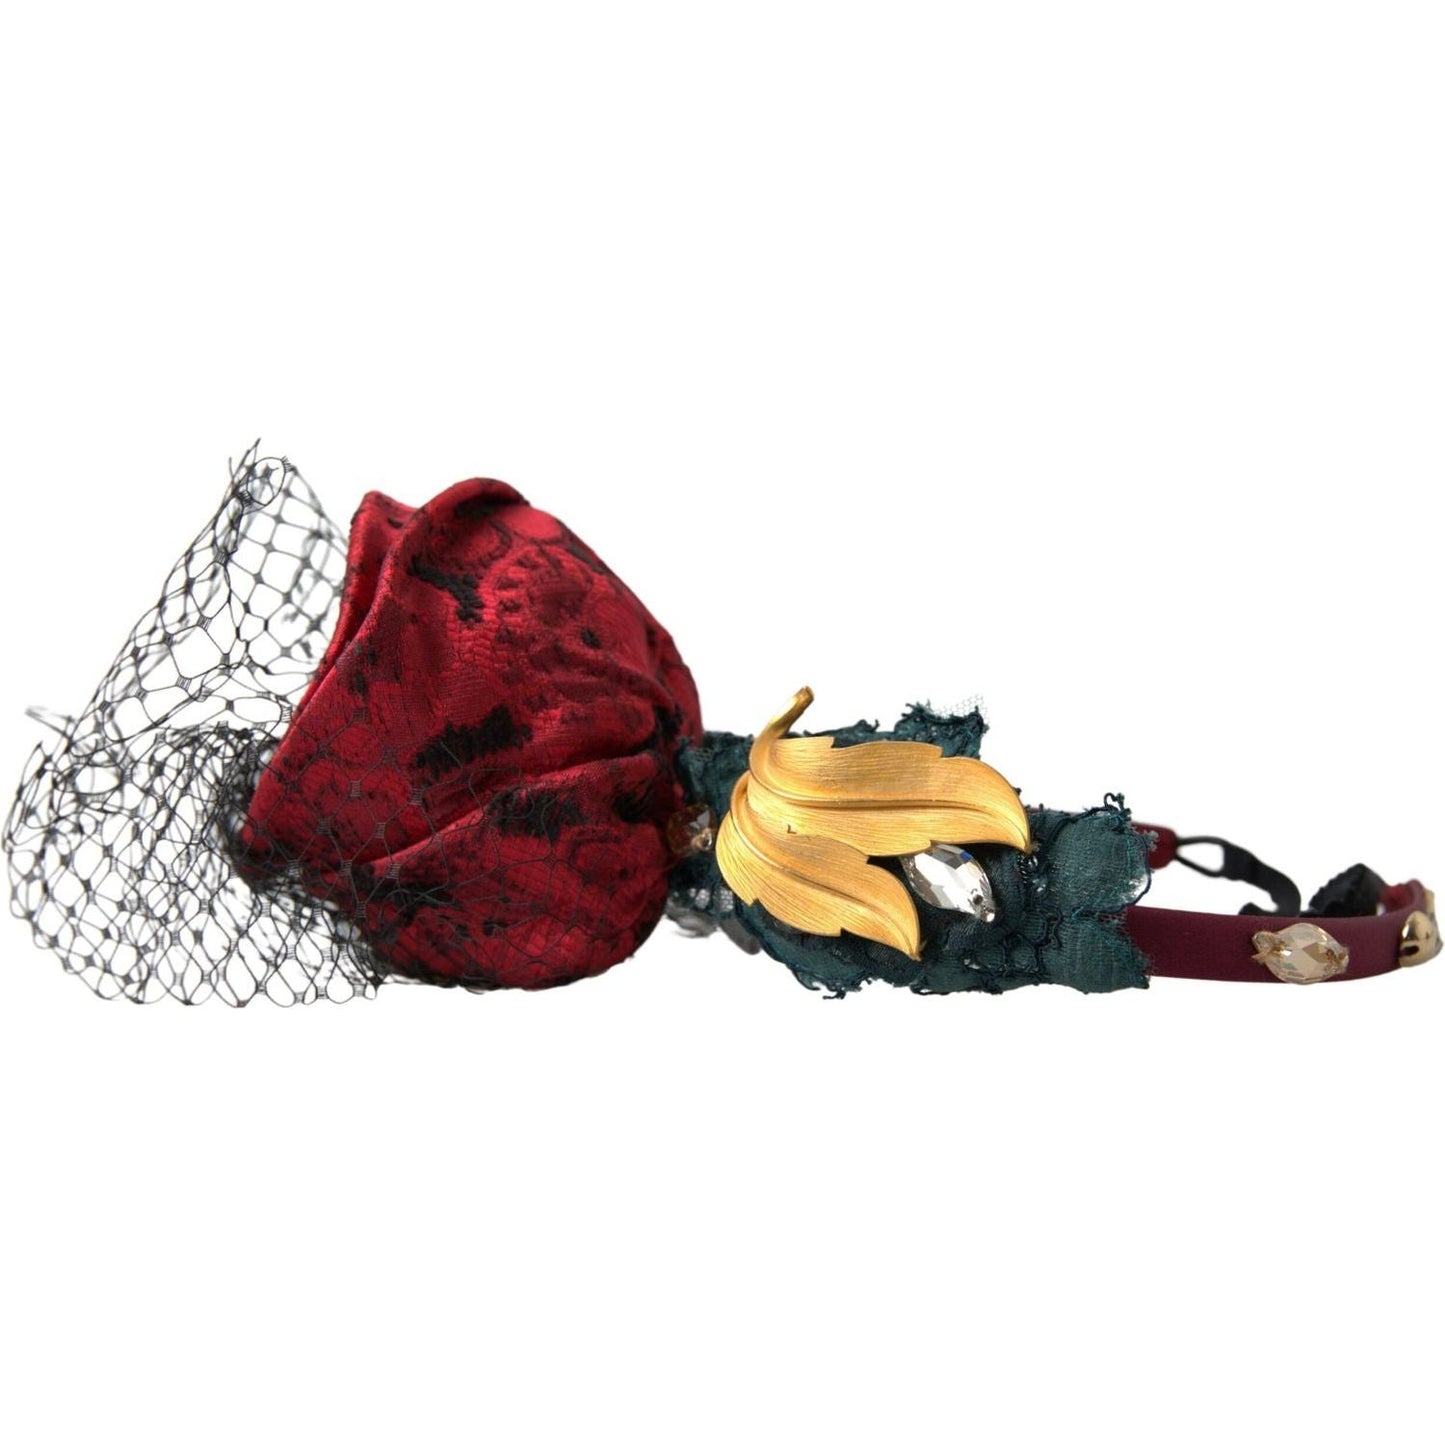 Dolce & Gabbana Enchanted Rose Crystal Headband Diadem red-with-multicolor-rose-silk-crystal-netted-logo-diadem-headband 465A2213-scaled-06875f6b-f5a.jpg